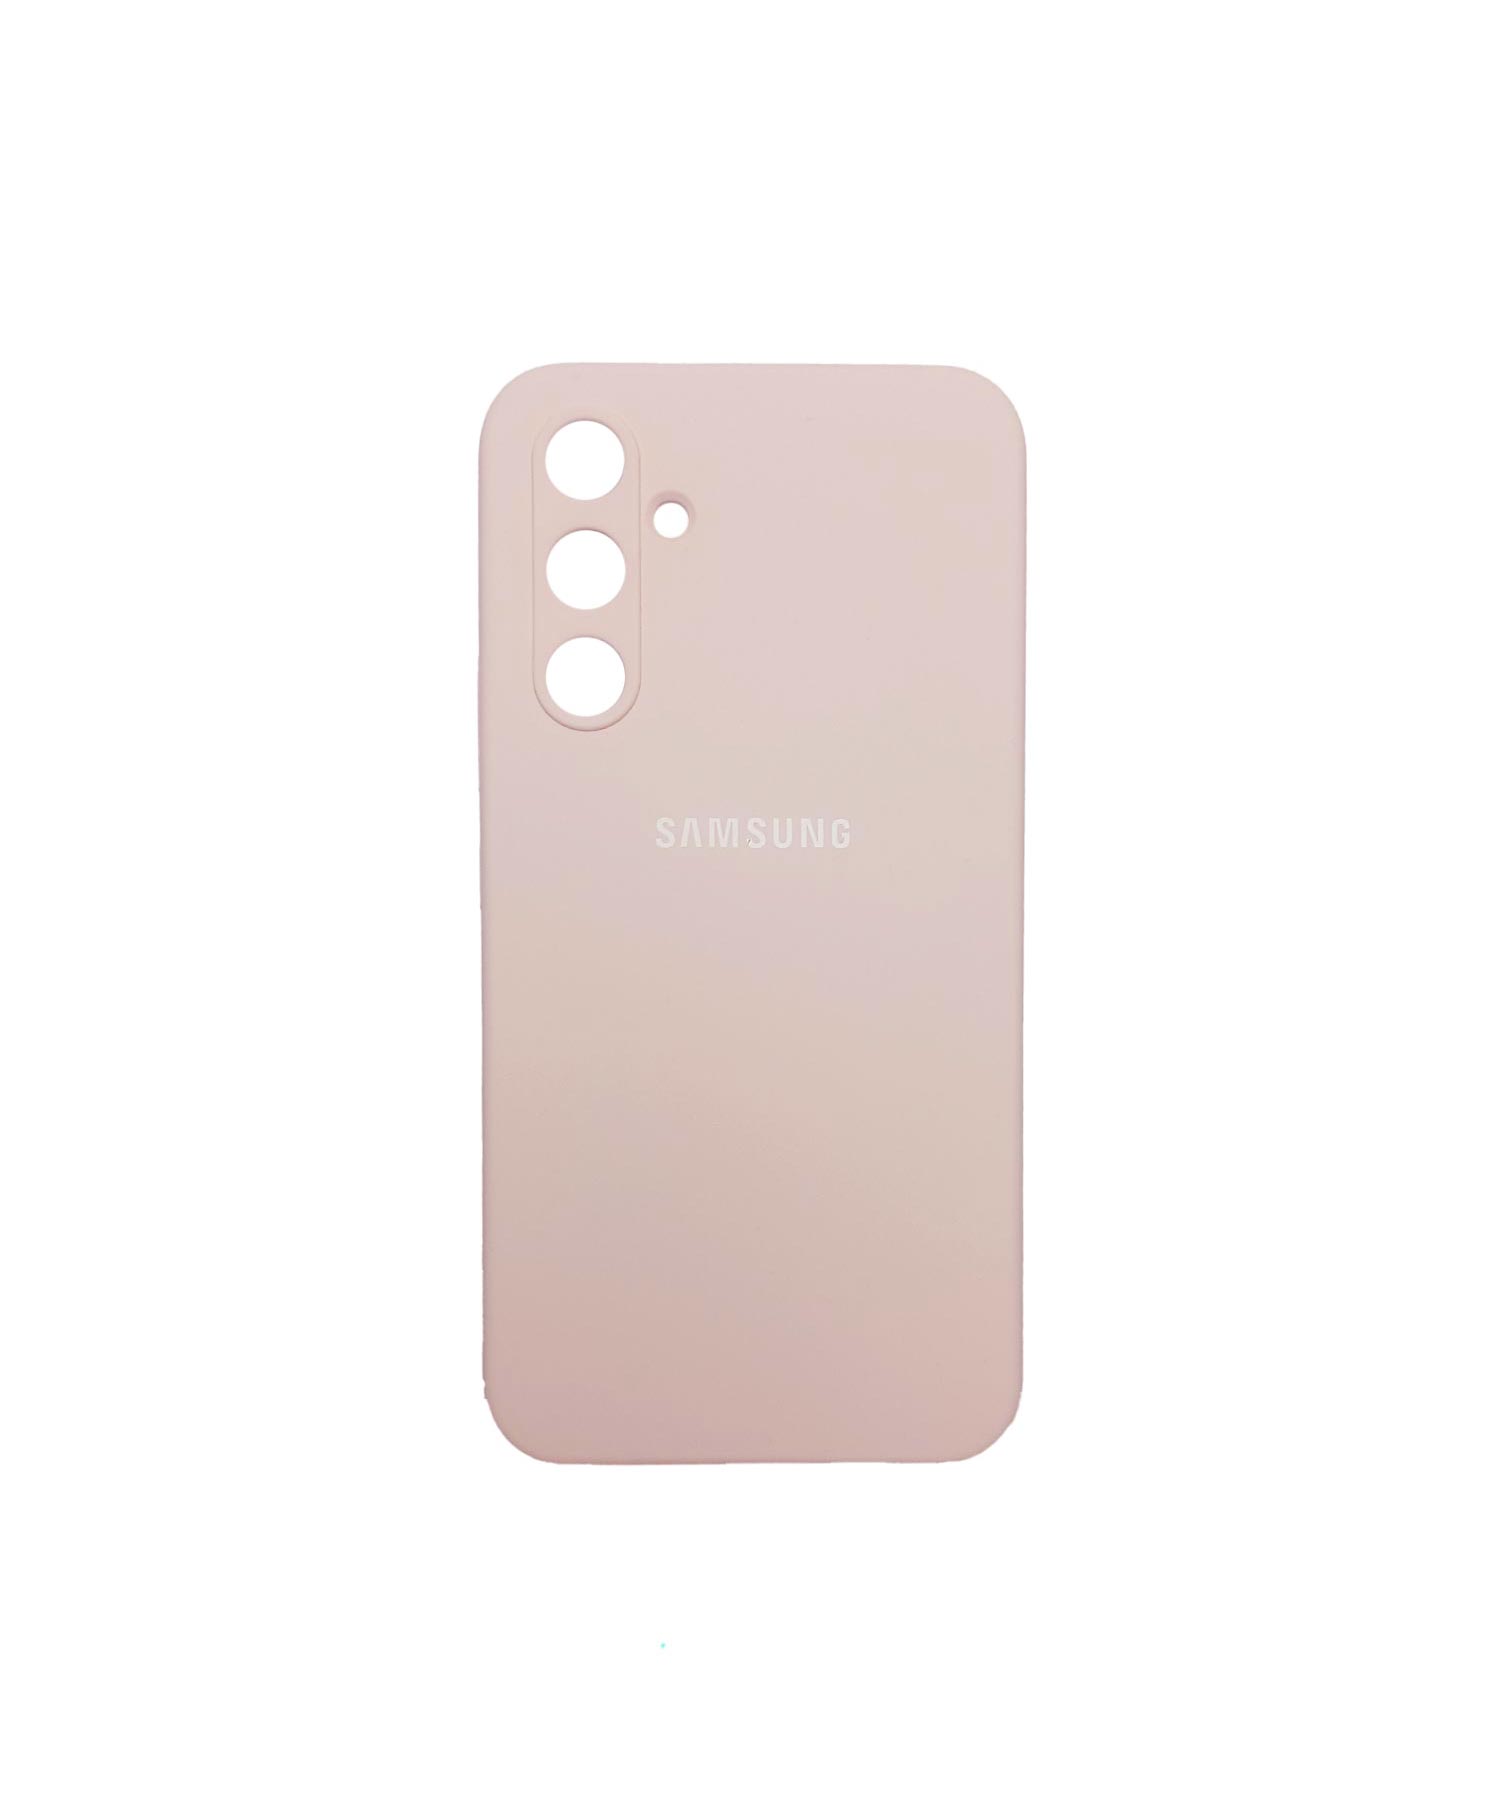 قاب سیلیکونی اورجینال گوشی موبایل سامسونگ Samsung A34 5G